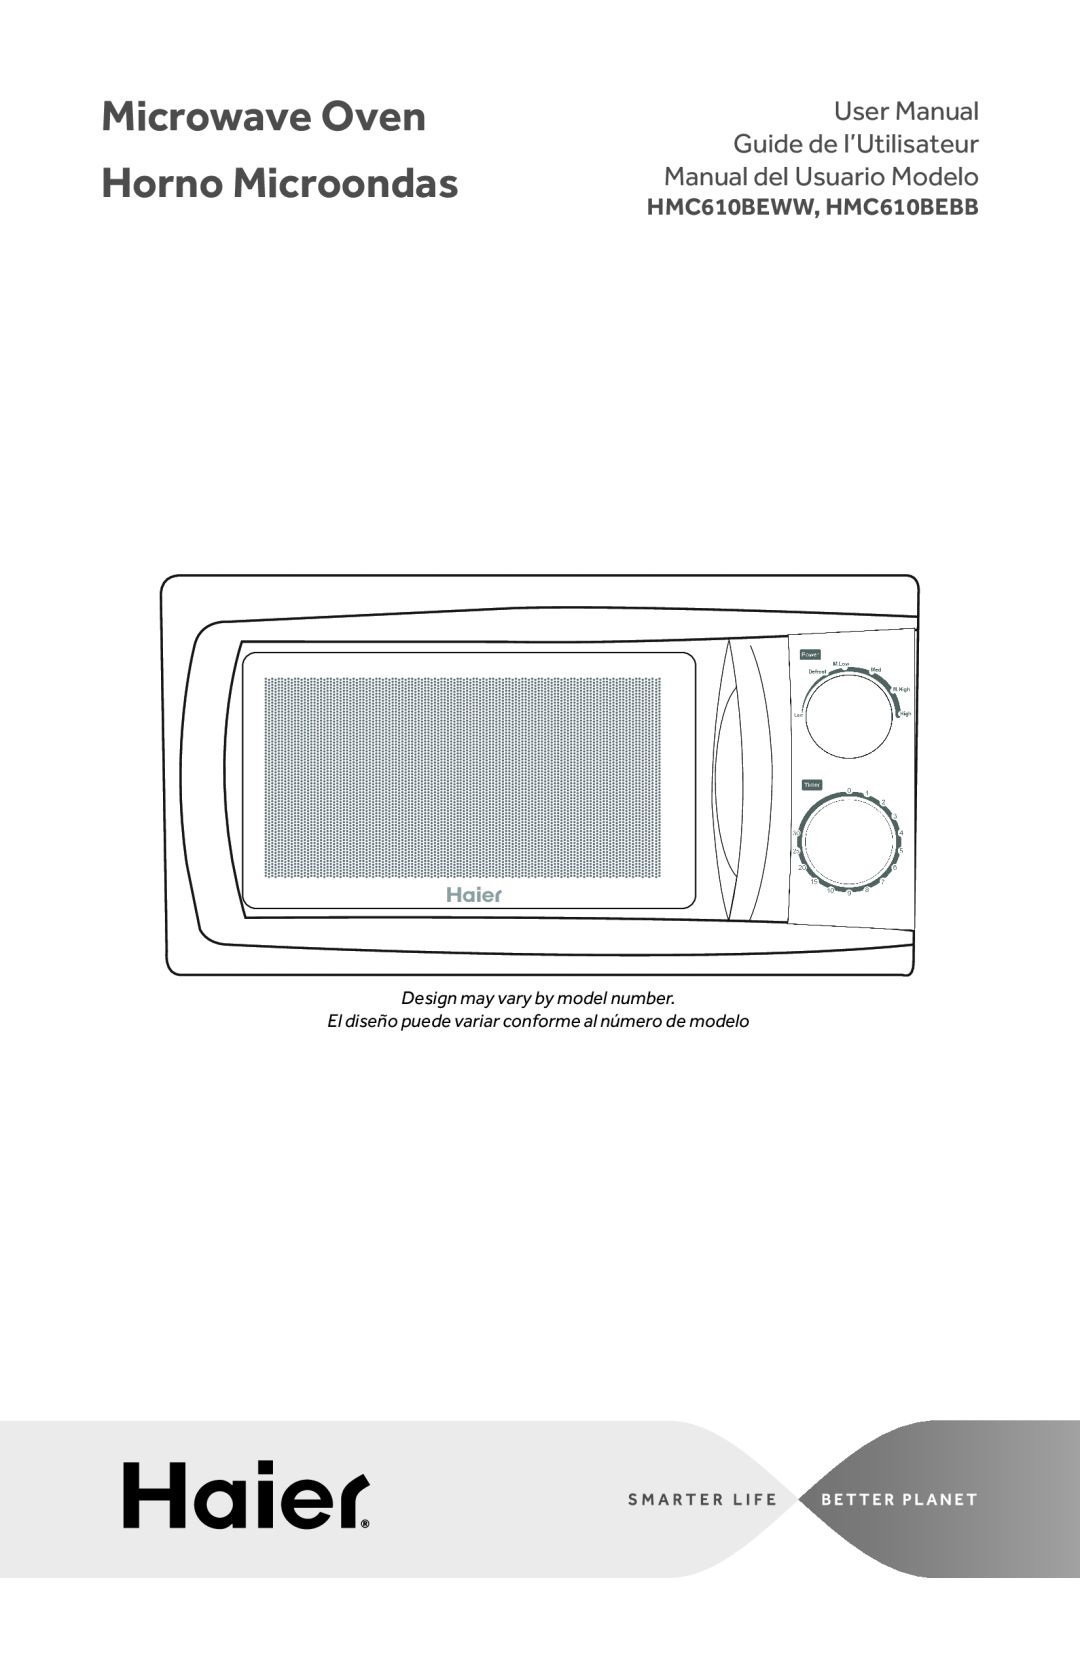 Haier HMC610BEBB user manual Microwave Oven Horno Microondas, User Manual Guide de l’Utilisateur Manual del Usuario Modelo 